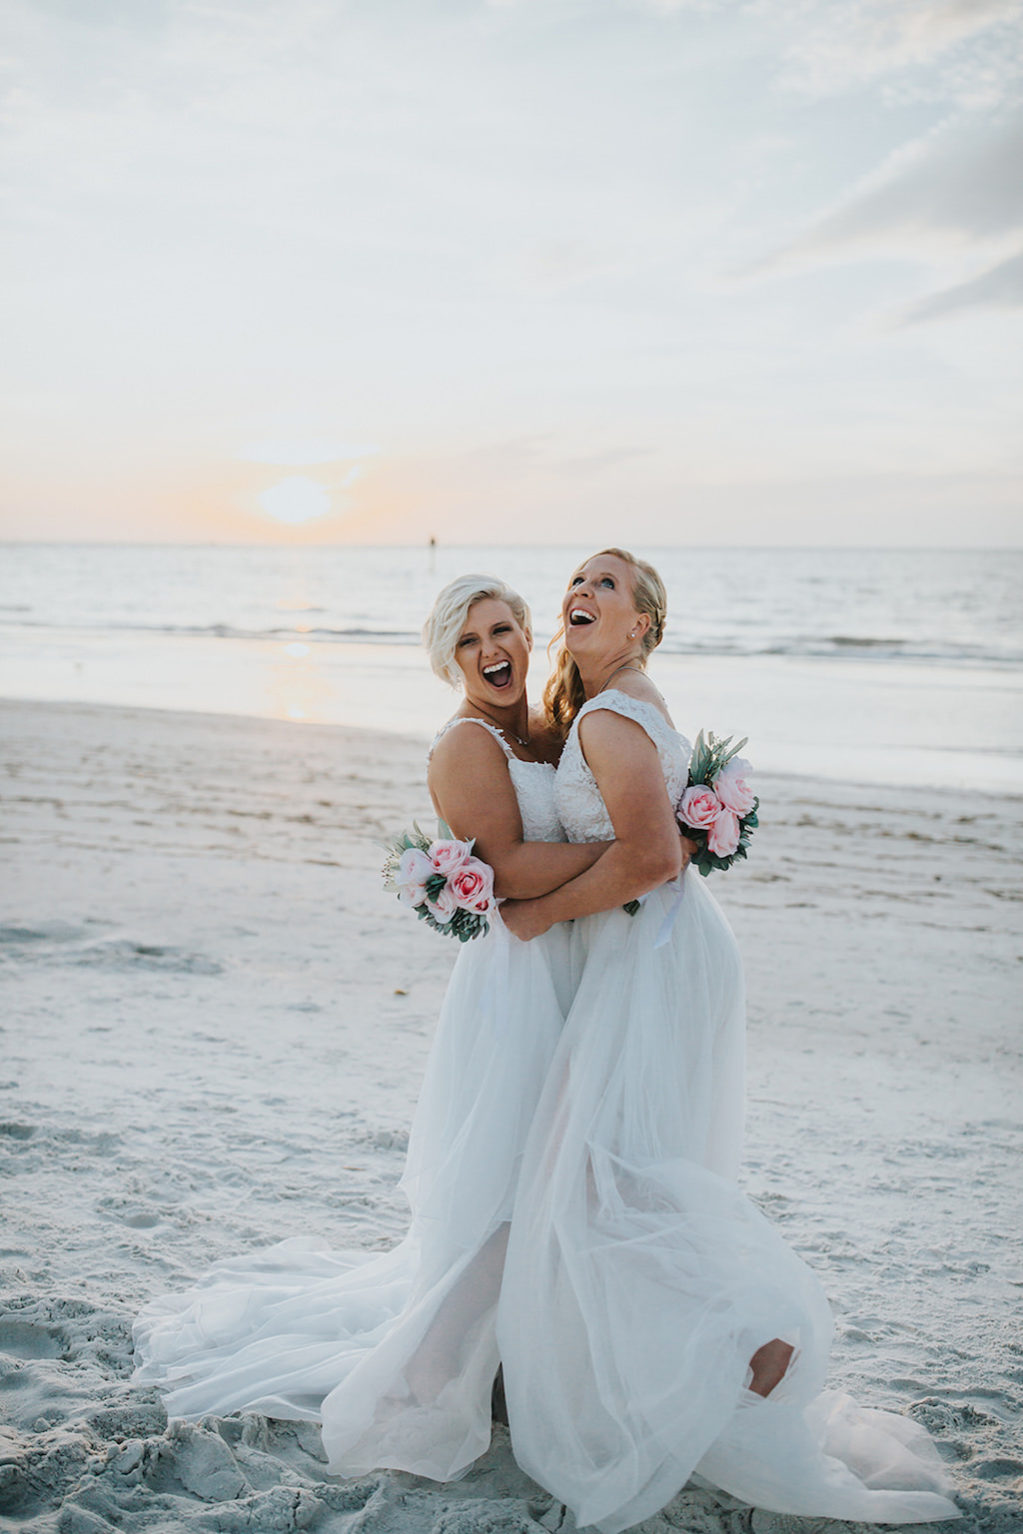 Clearwater Beach Florida Same Sex Gay Waterfront Sunset Bridal Wedding Portrait | Venue Hyatt Regency Clearwater Beach